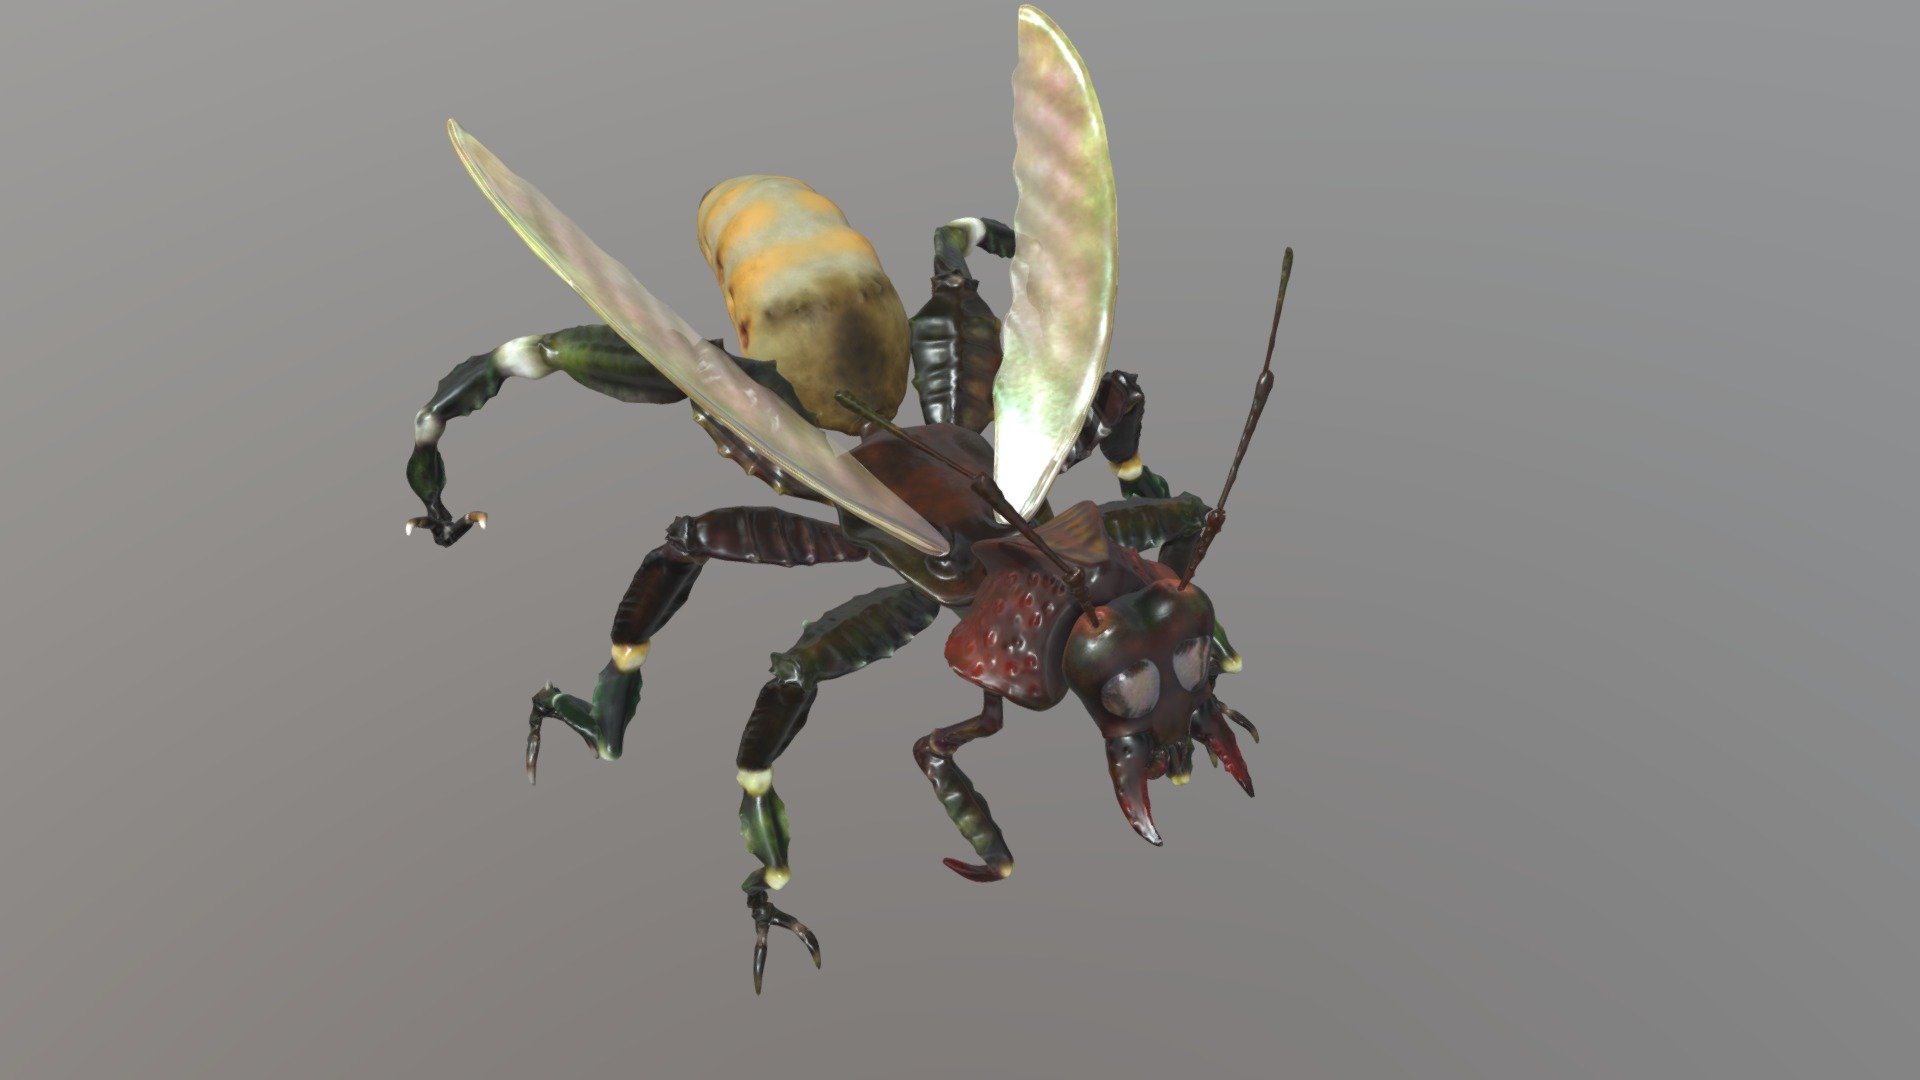 Mutated beetle